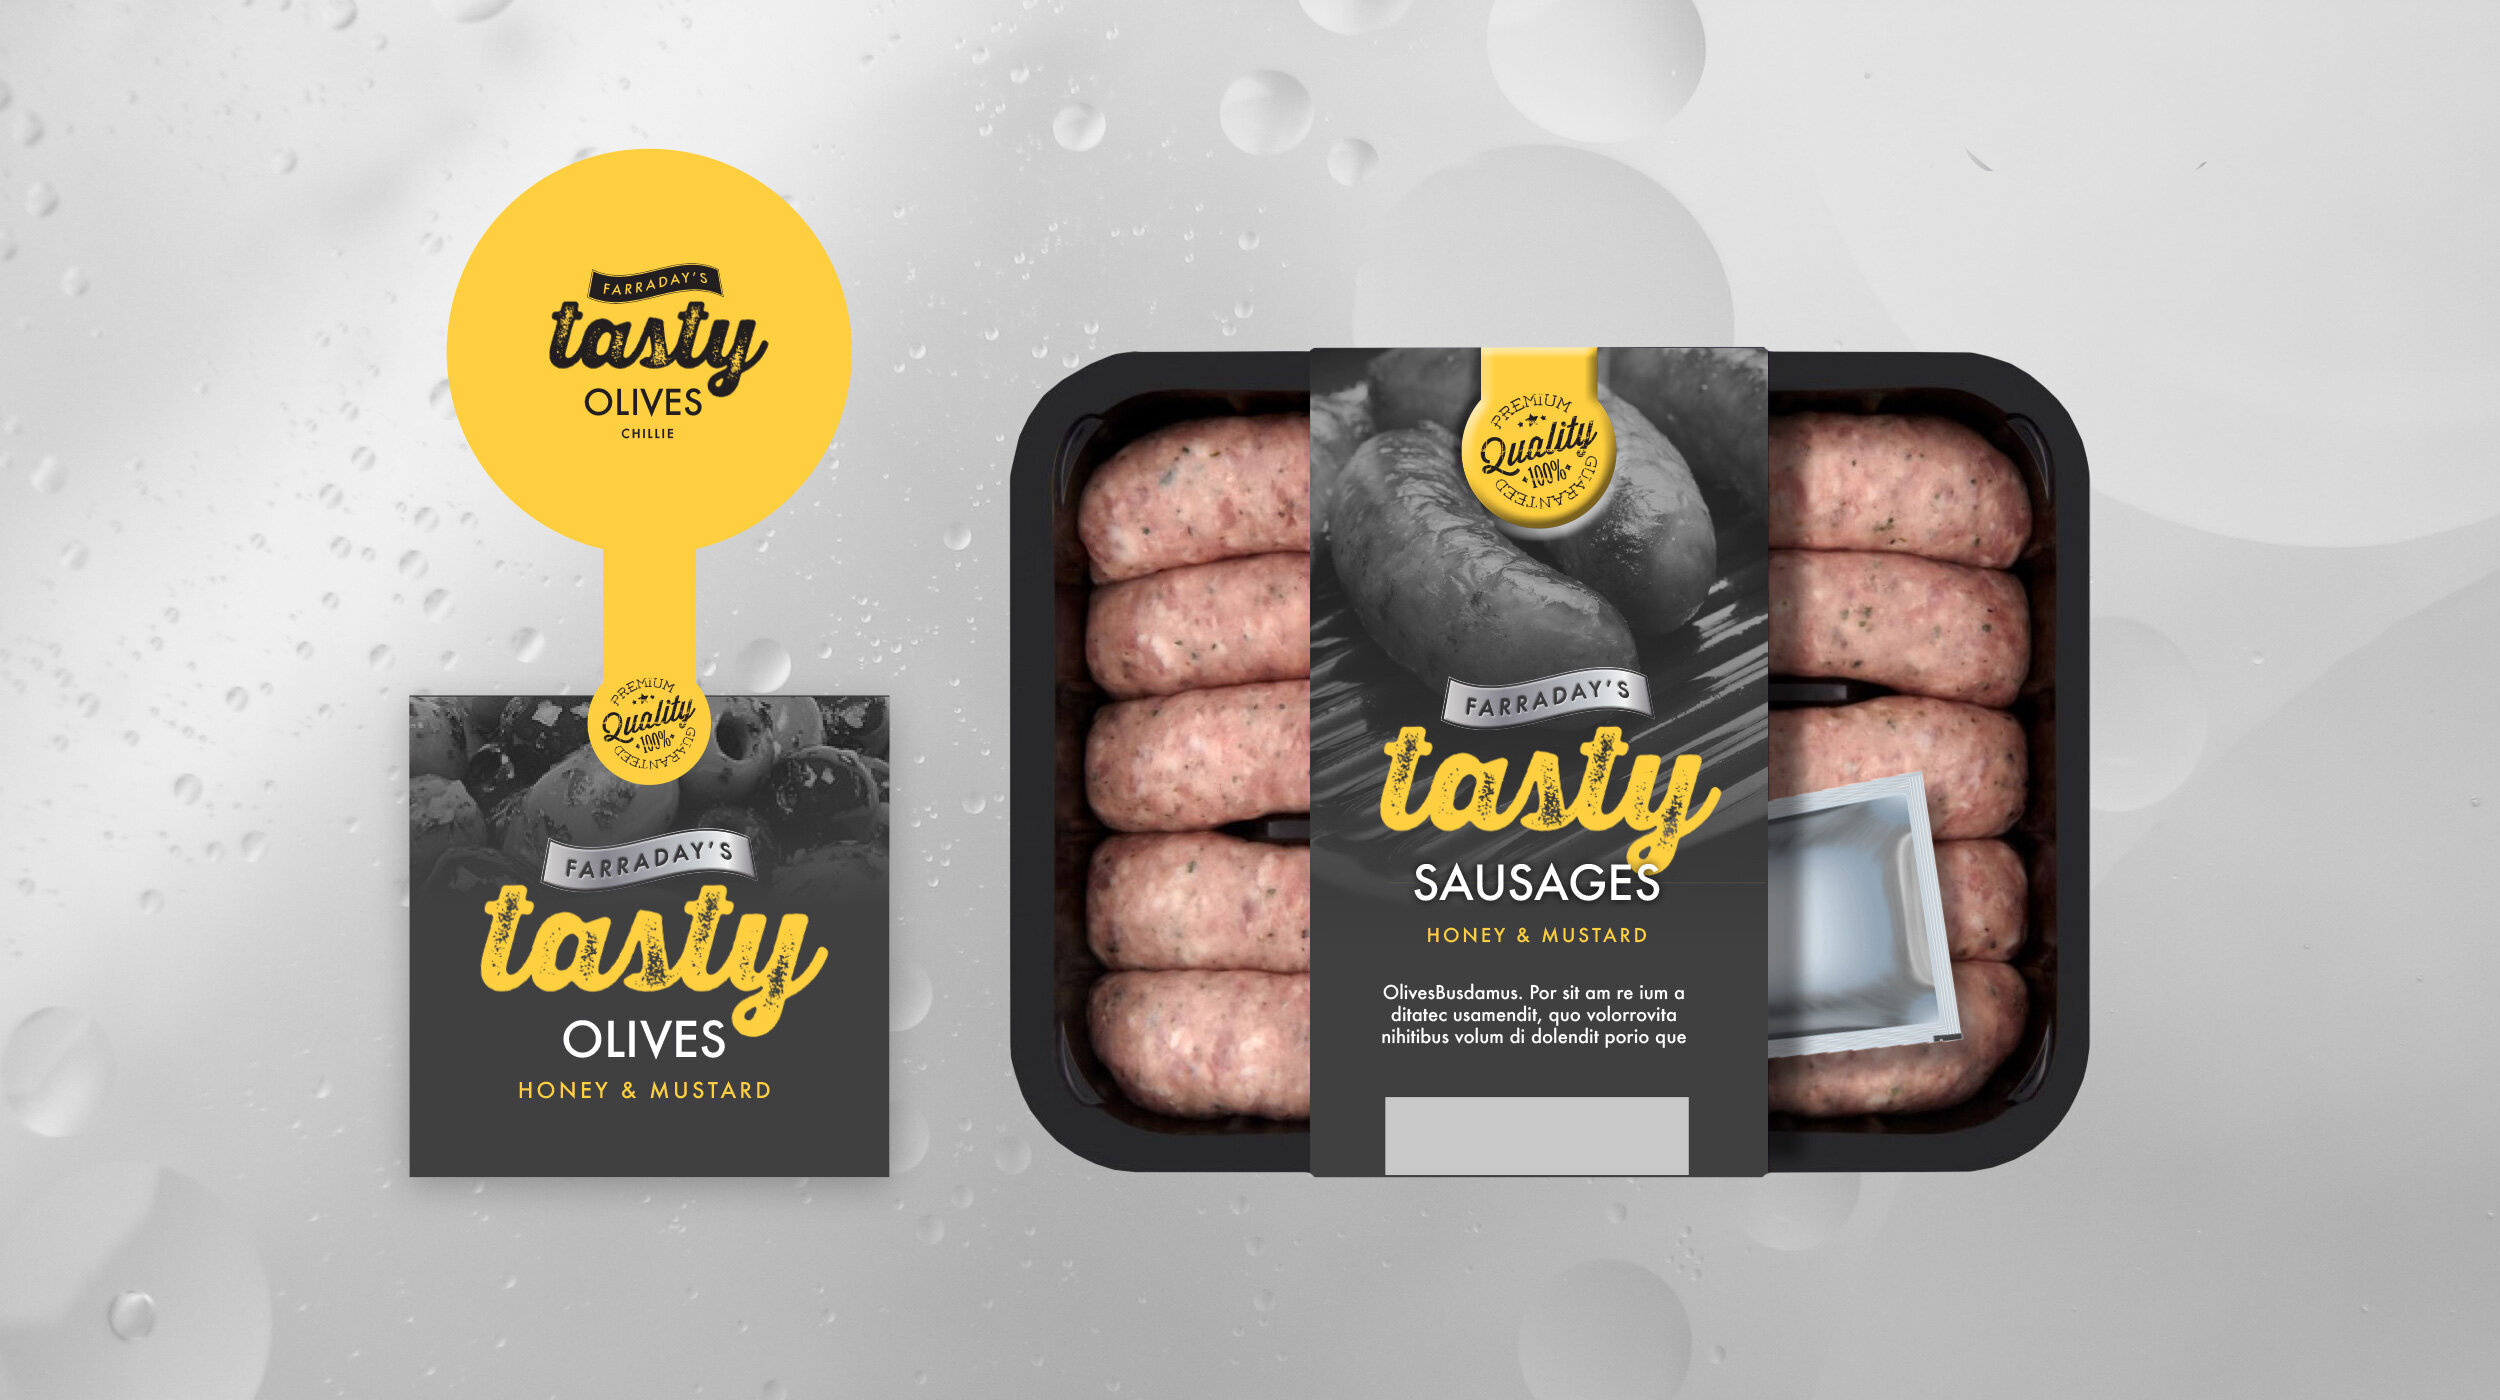 brand-food-packaging-design-farradays-tasty-adam-thorp-7.jpeg